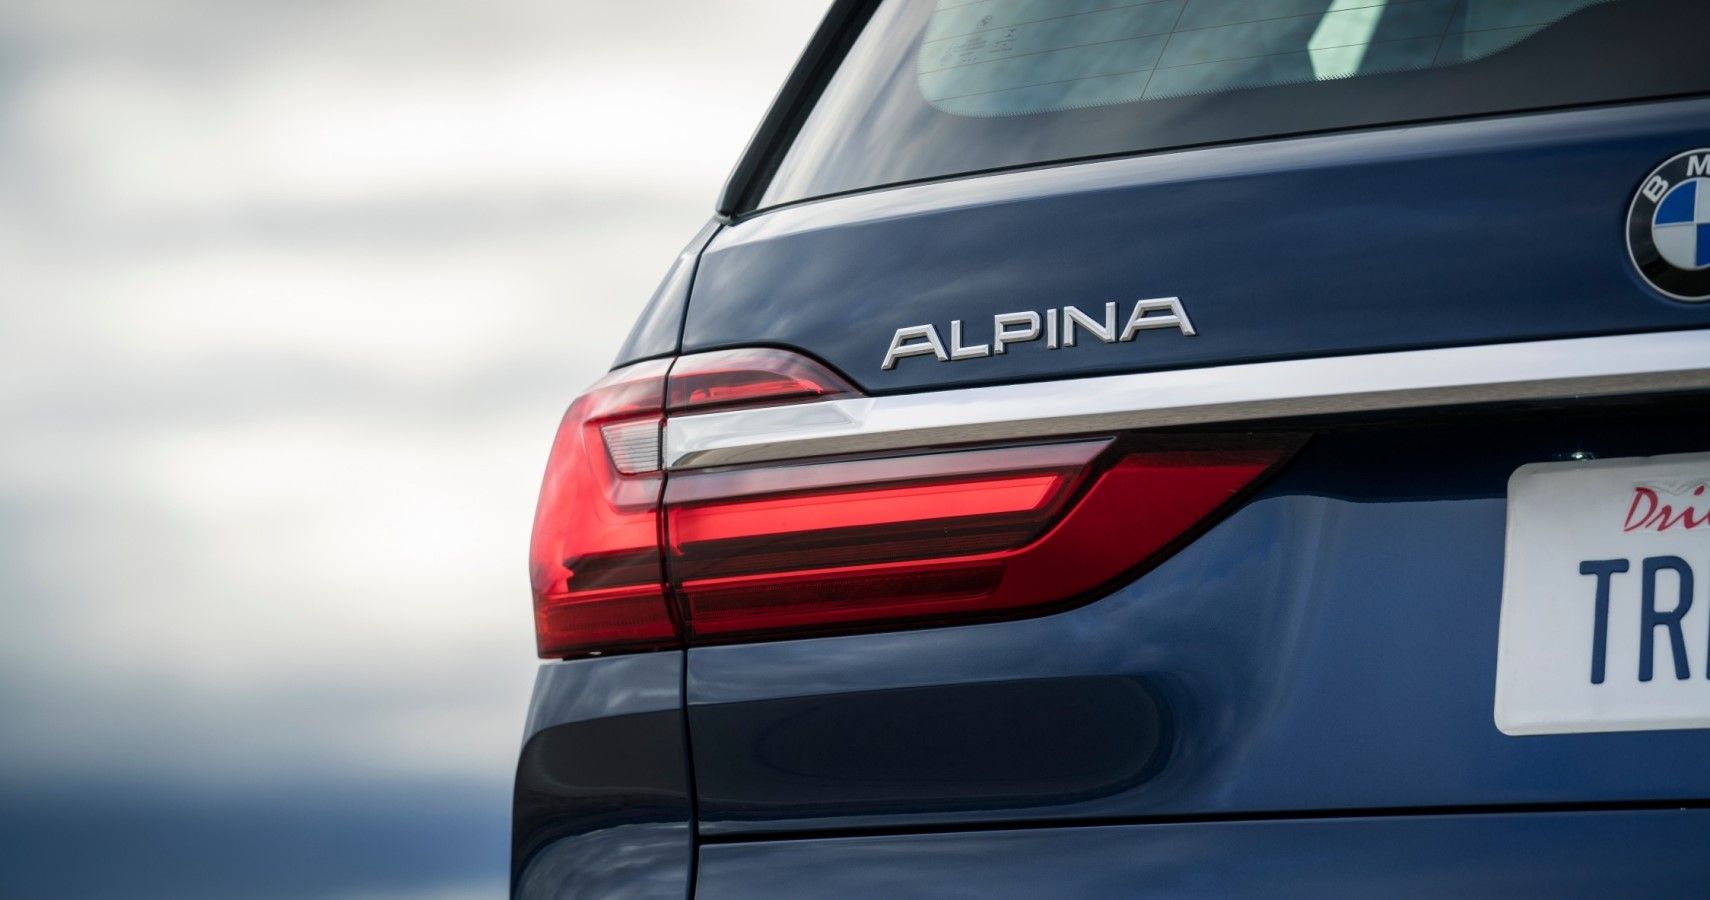 2022 BMW Alpina XB7 rear badging close-up view